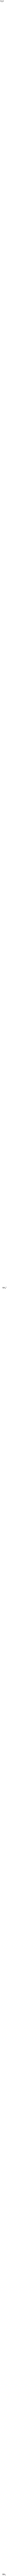 Ammonium tetraborate ((NH4)2B4O7)